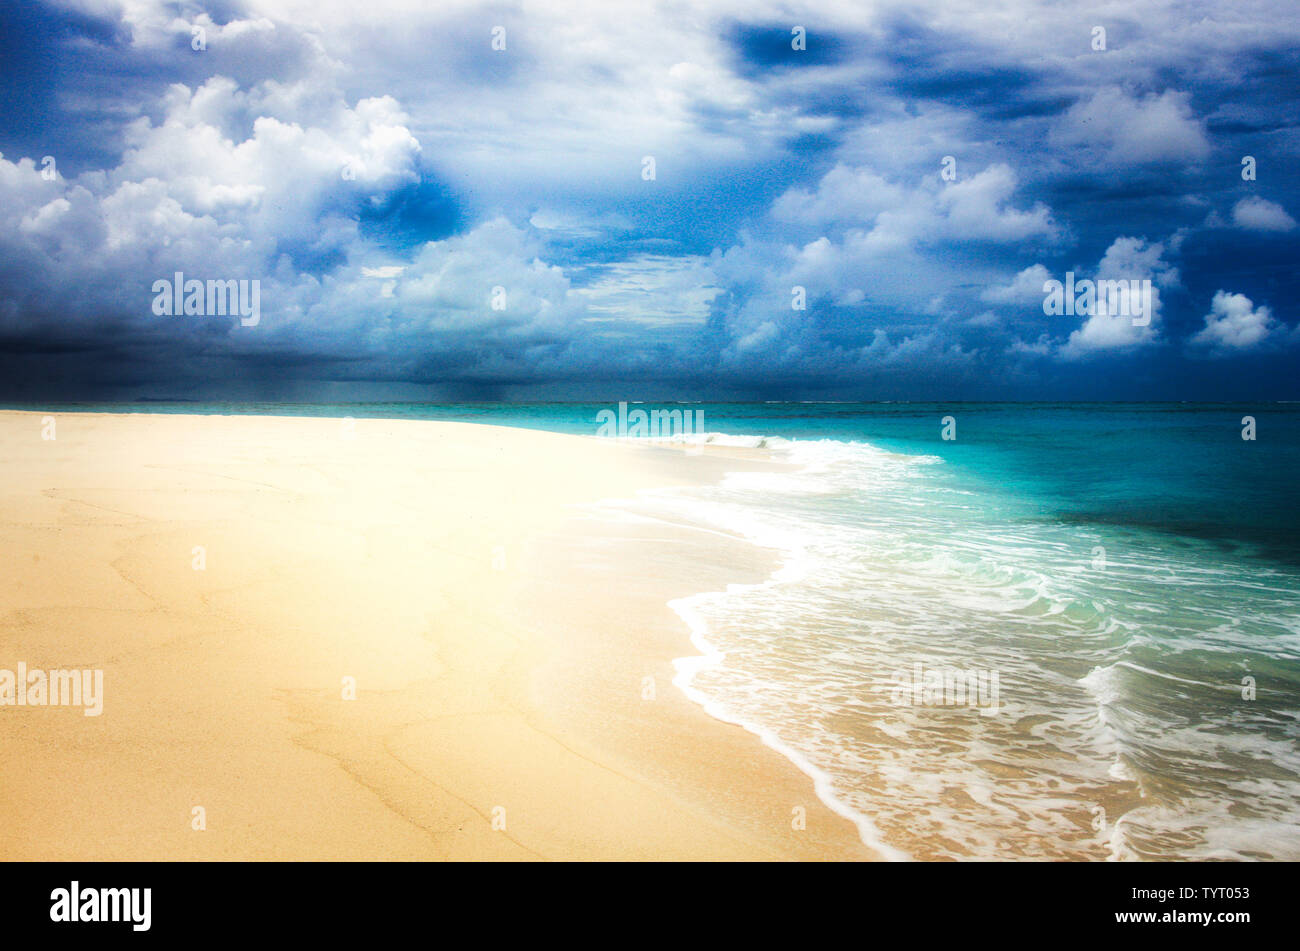 Tropical Island with a paradise beach and palm trees, Fiji Islands Stock Photo